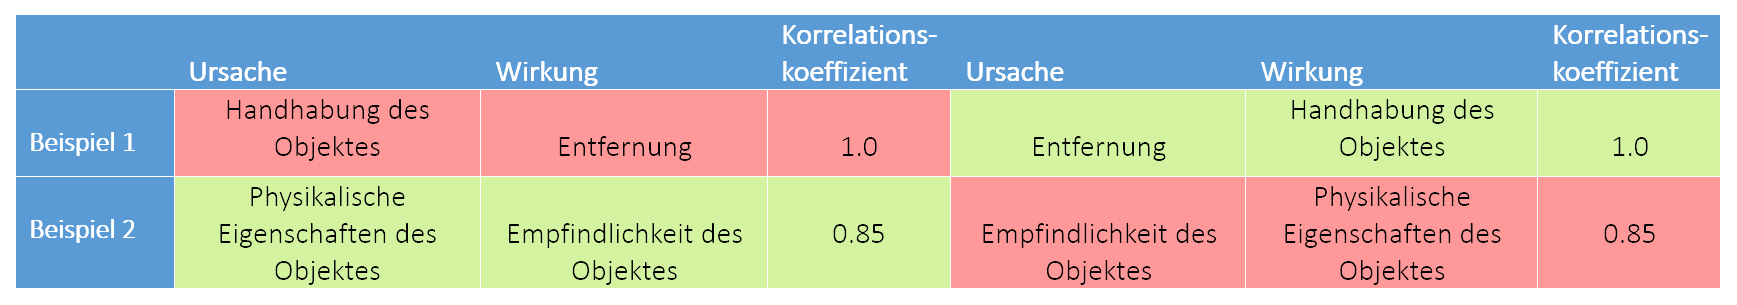 Korrelationsanalyse in der Logistik.docx - Word 2019-10-09 14.50.29